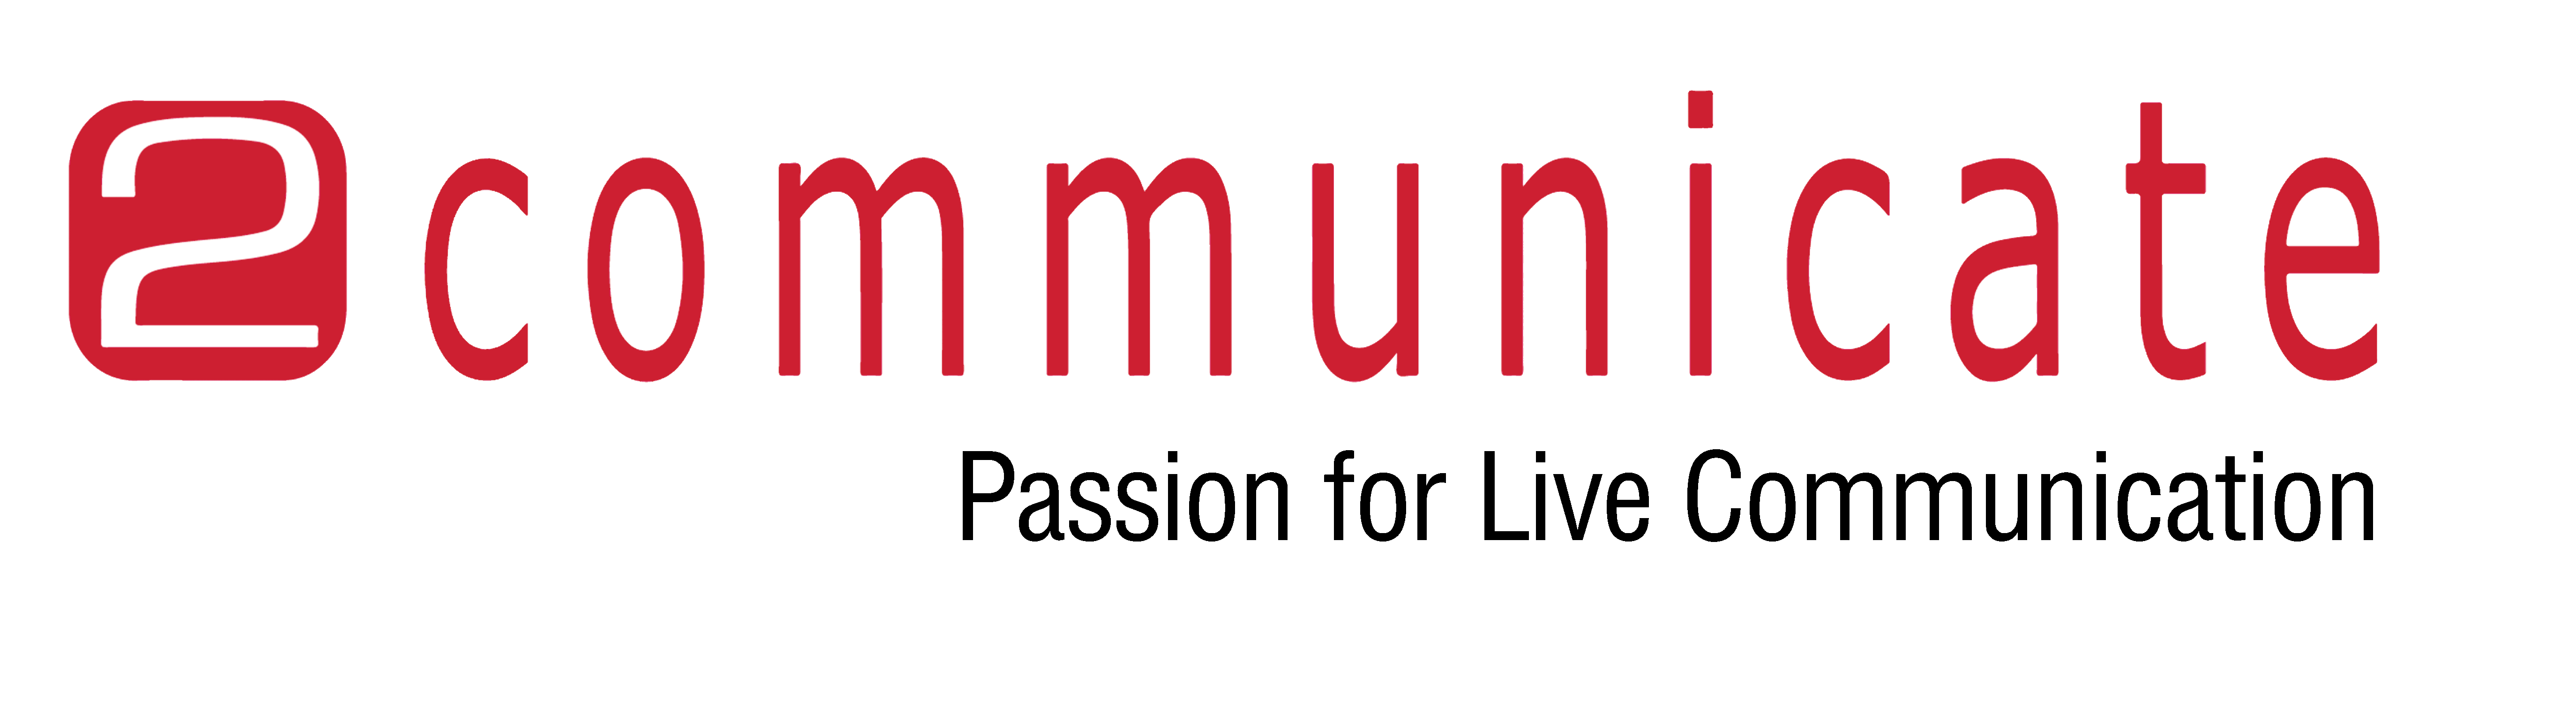 2communicate Logo